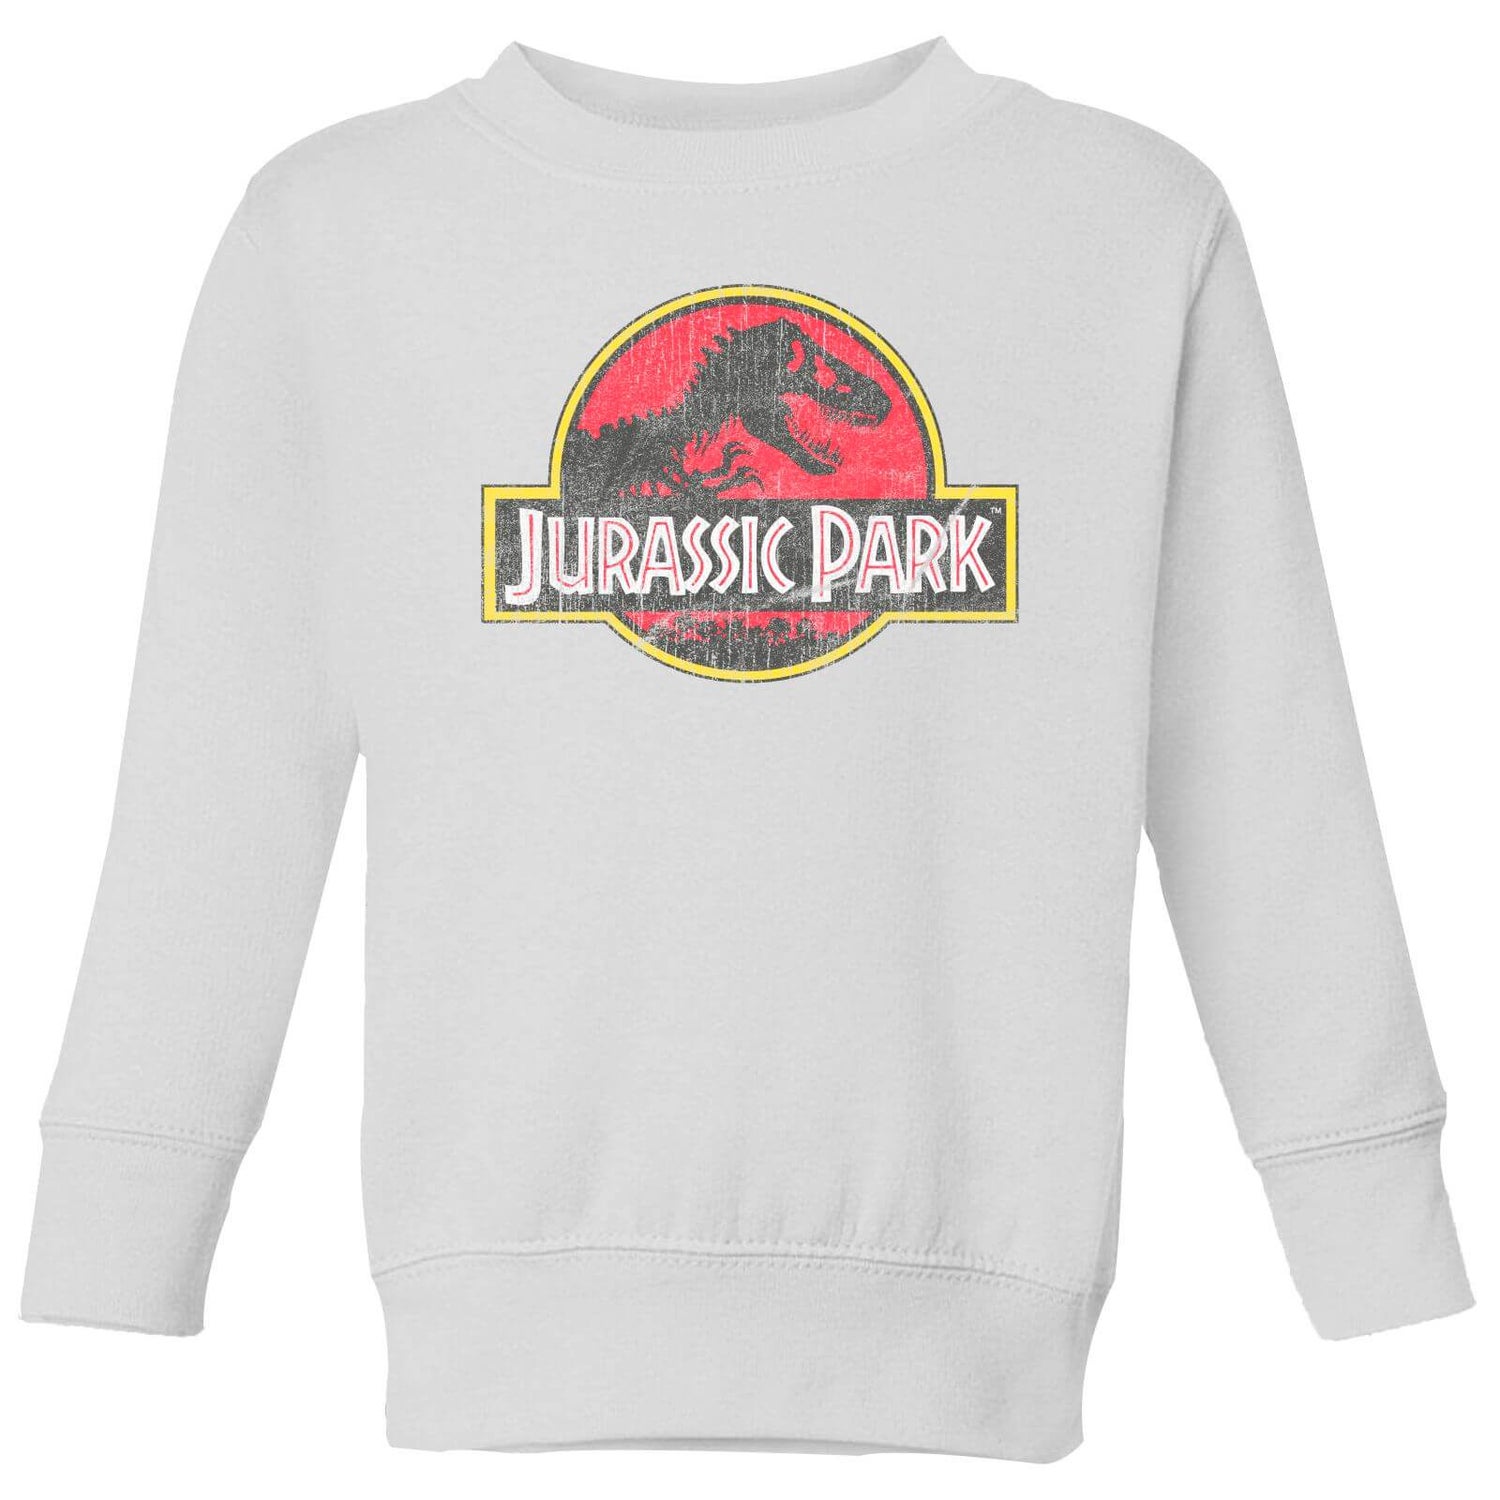 Jurassic Park Logo Vintage Kids' Sweatshirt - White